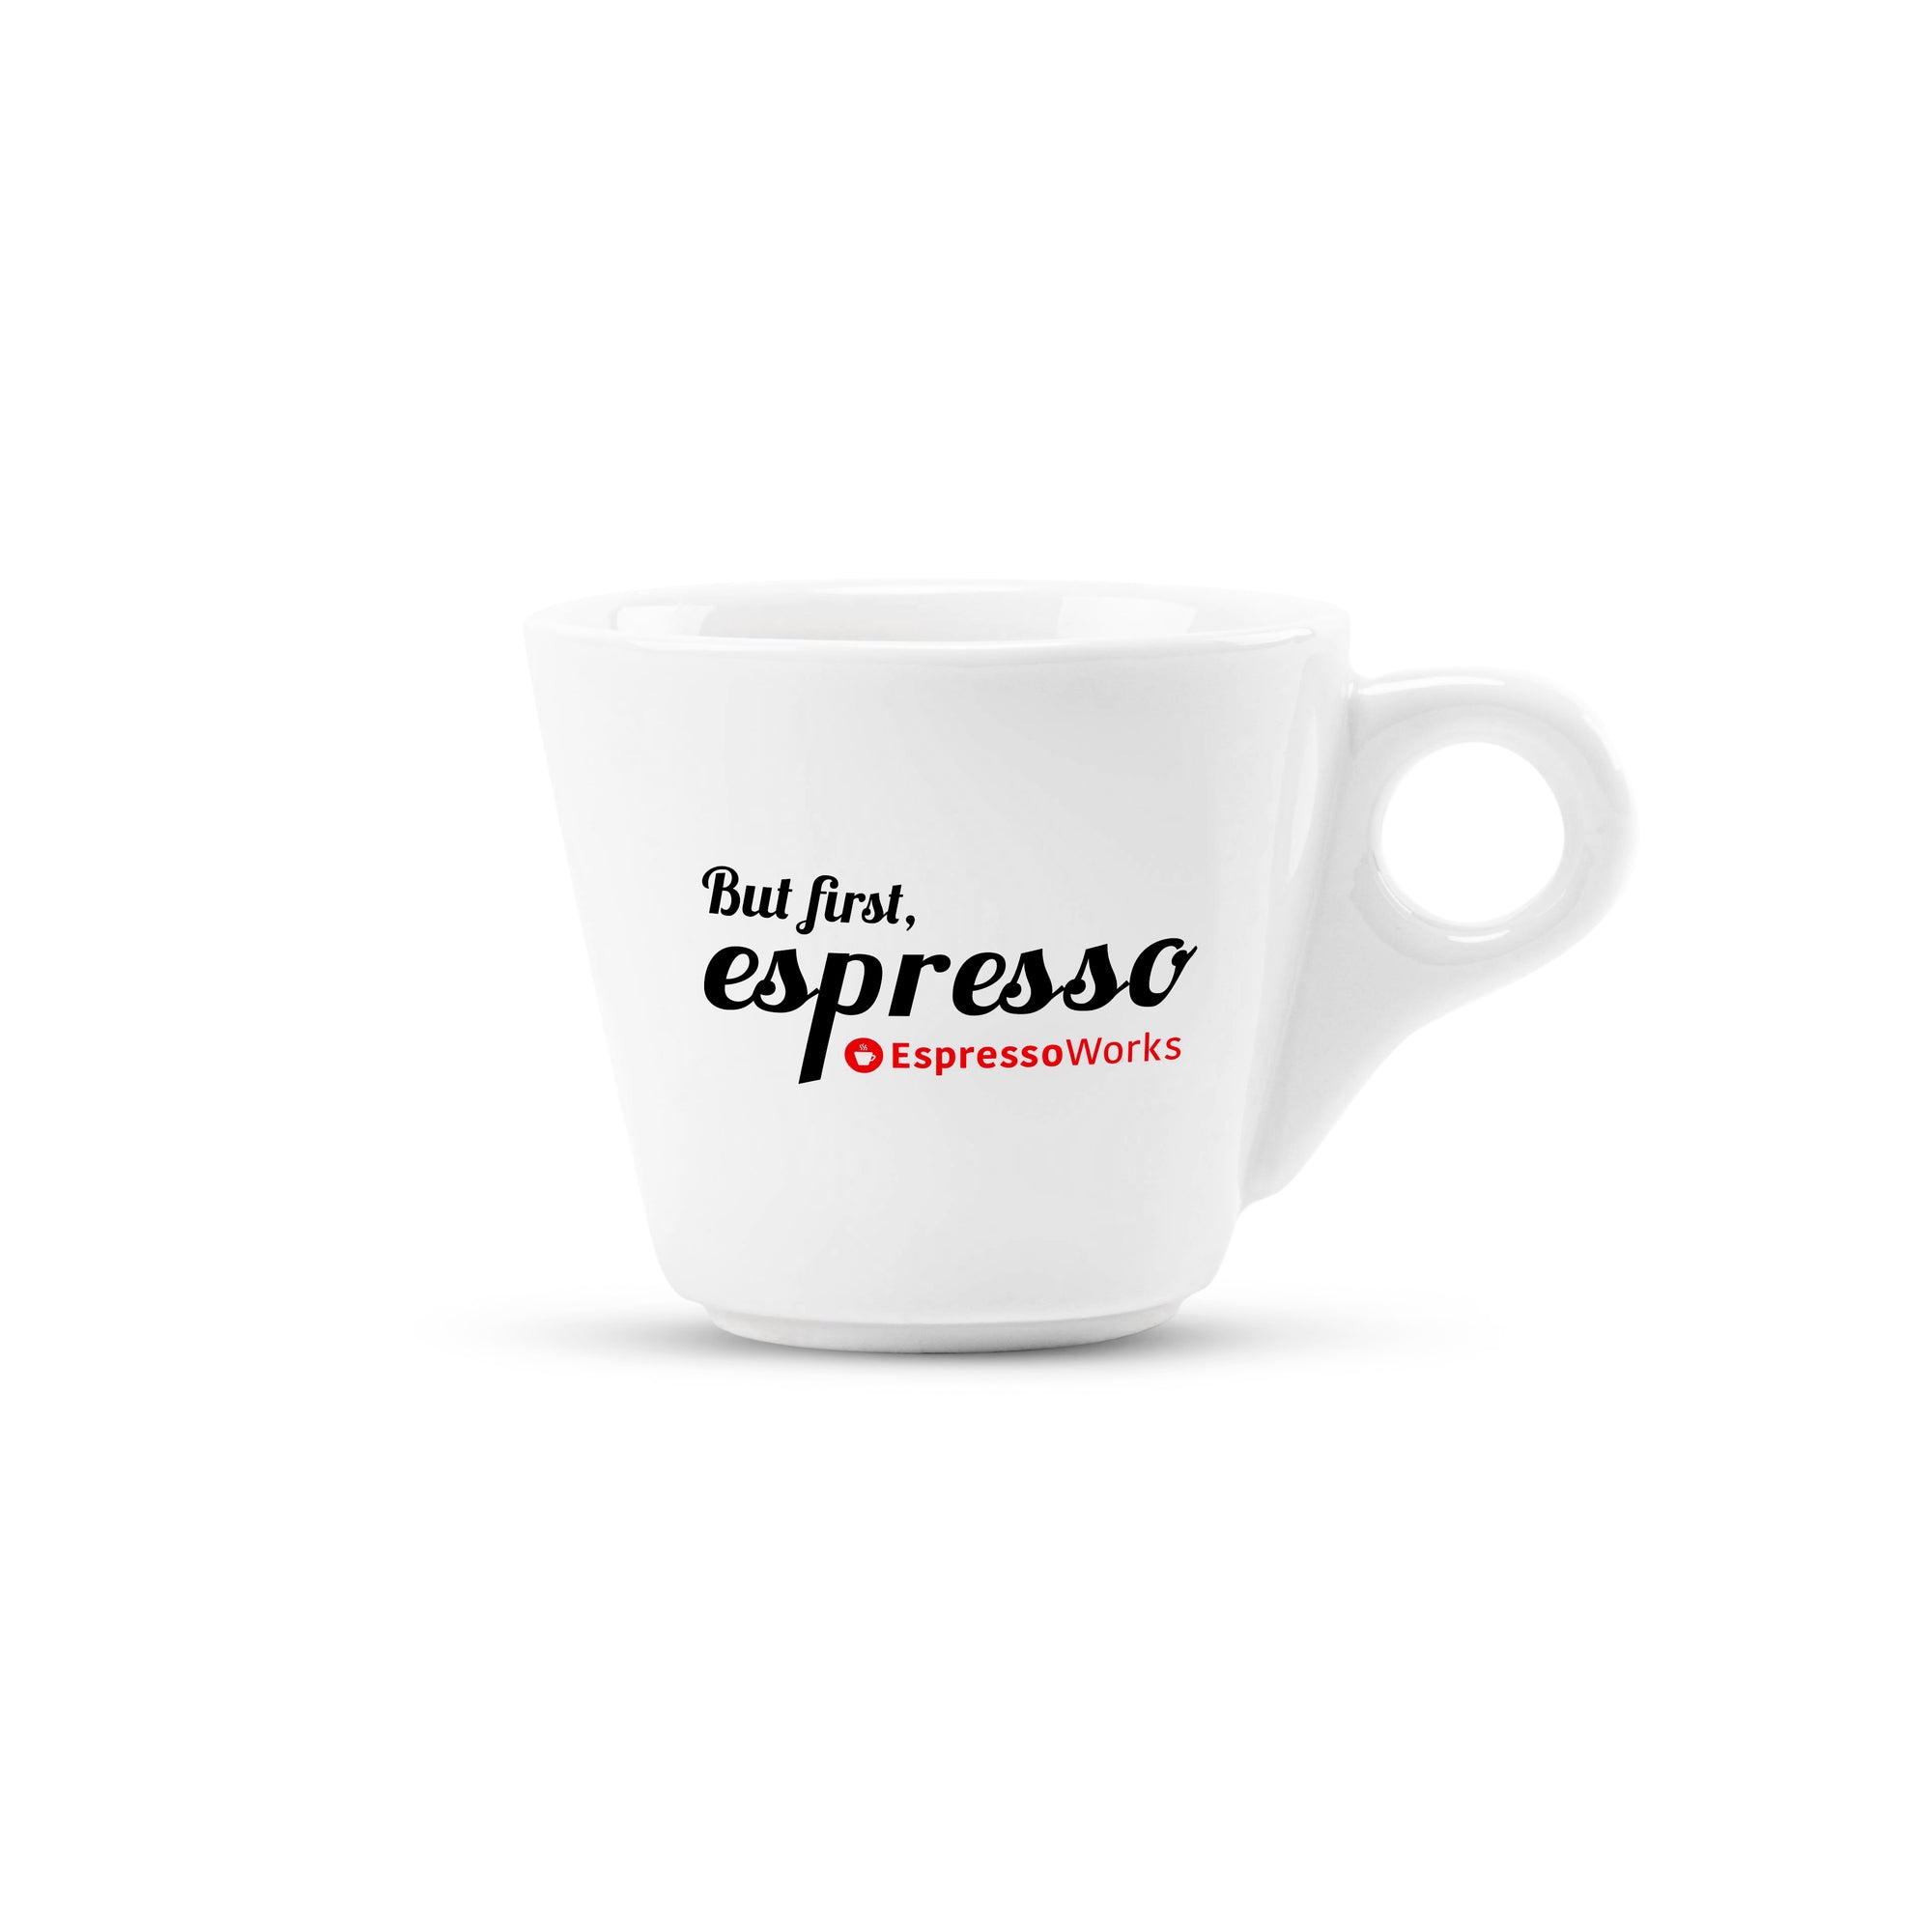 https://cdn.shopify.com/s/files/1/0293/4380/9620/products/espressoworks-quote-ceramic-espresso-cup-ways-but-first-espresso-01_a0cbd37b-4010-47f6-9d60-0316ccb18527_2000x.jpg?v=1620115554